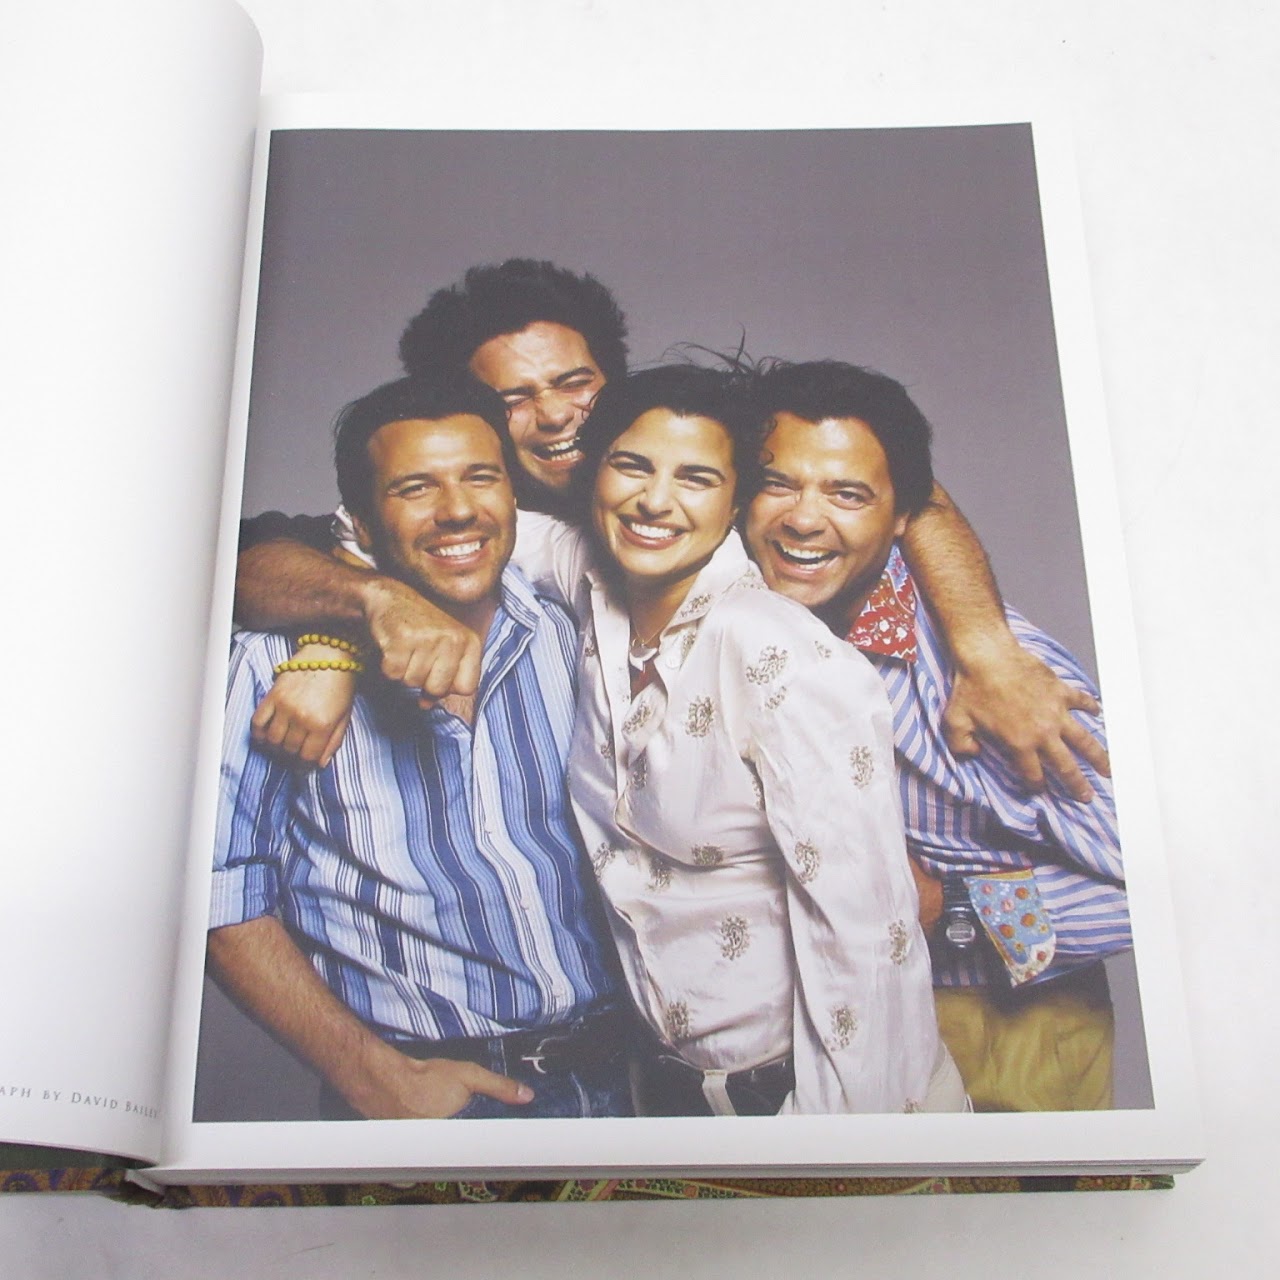 'Etro' Fashion Monograph Hardcover